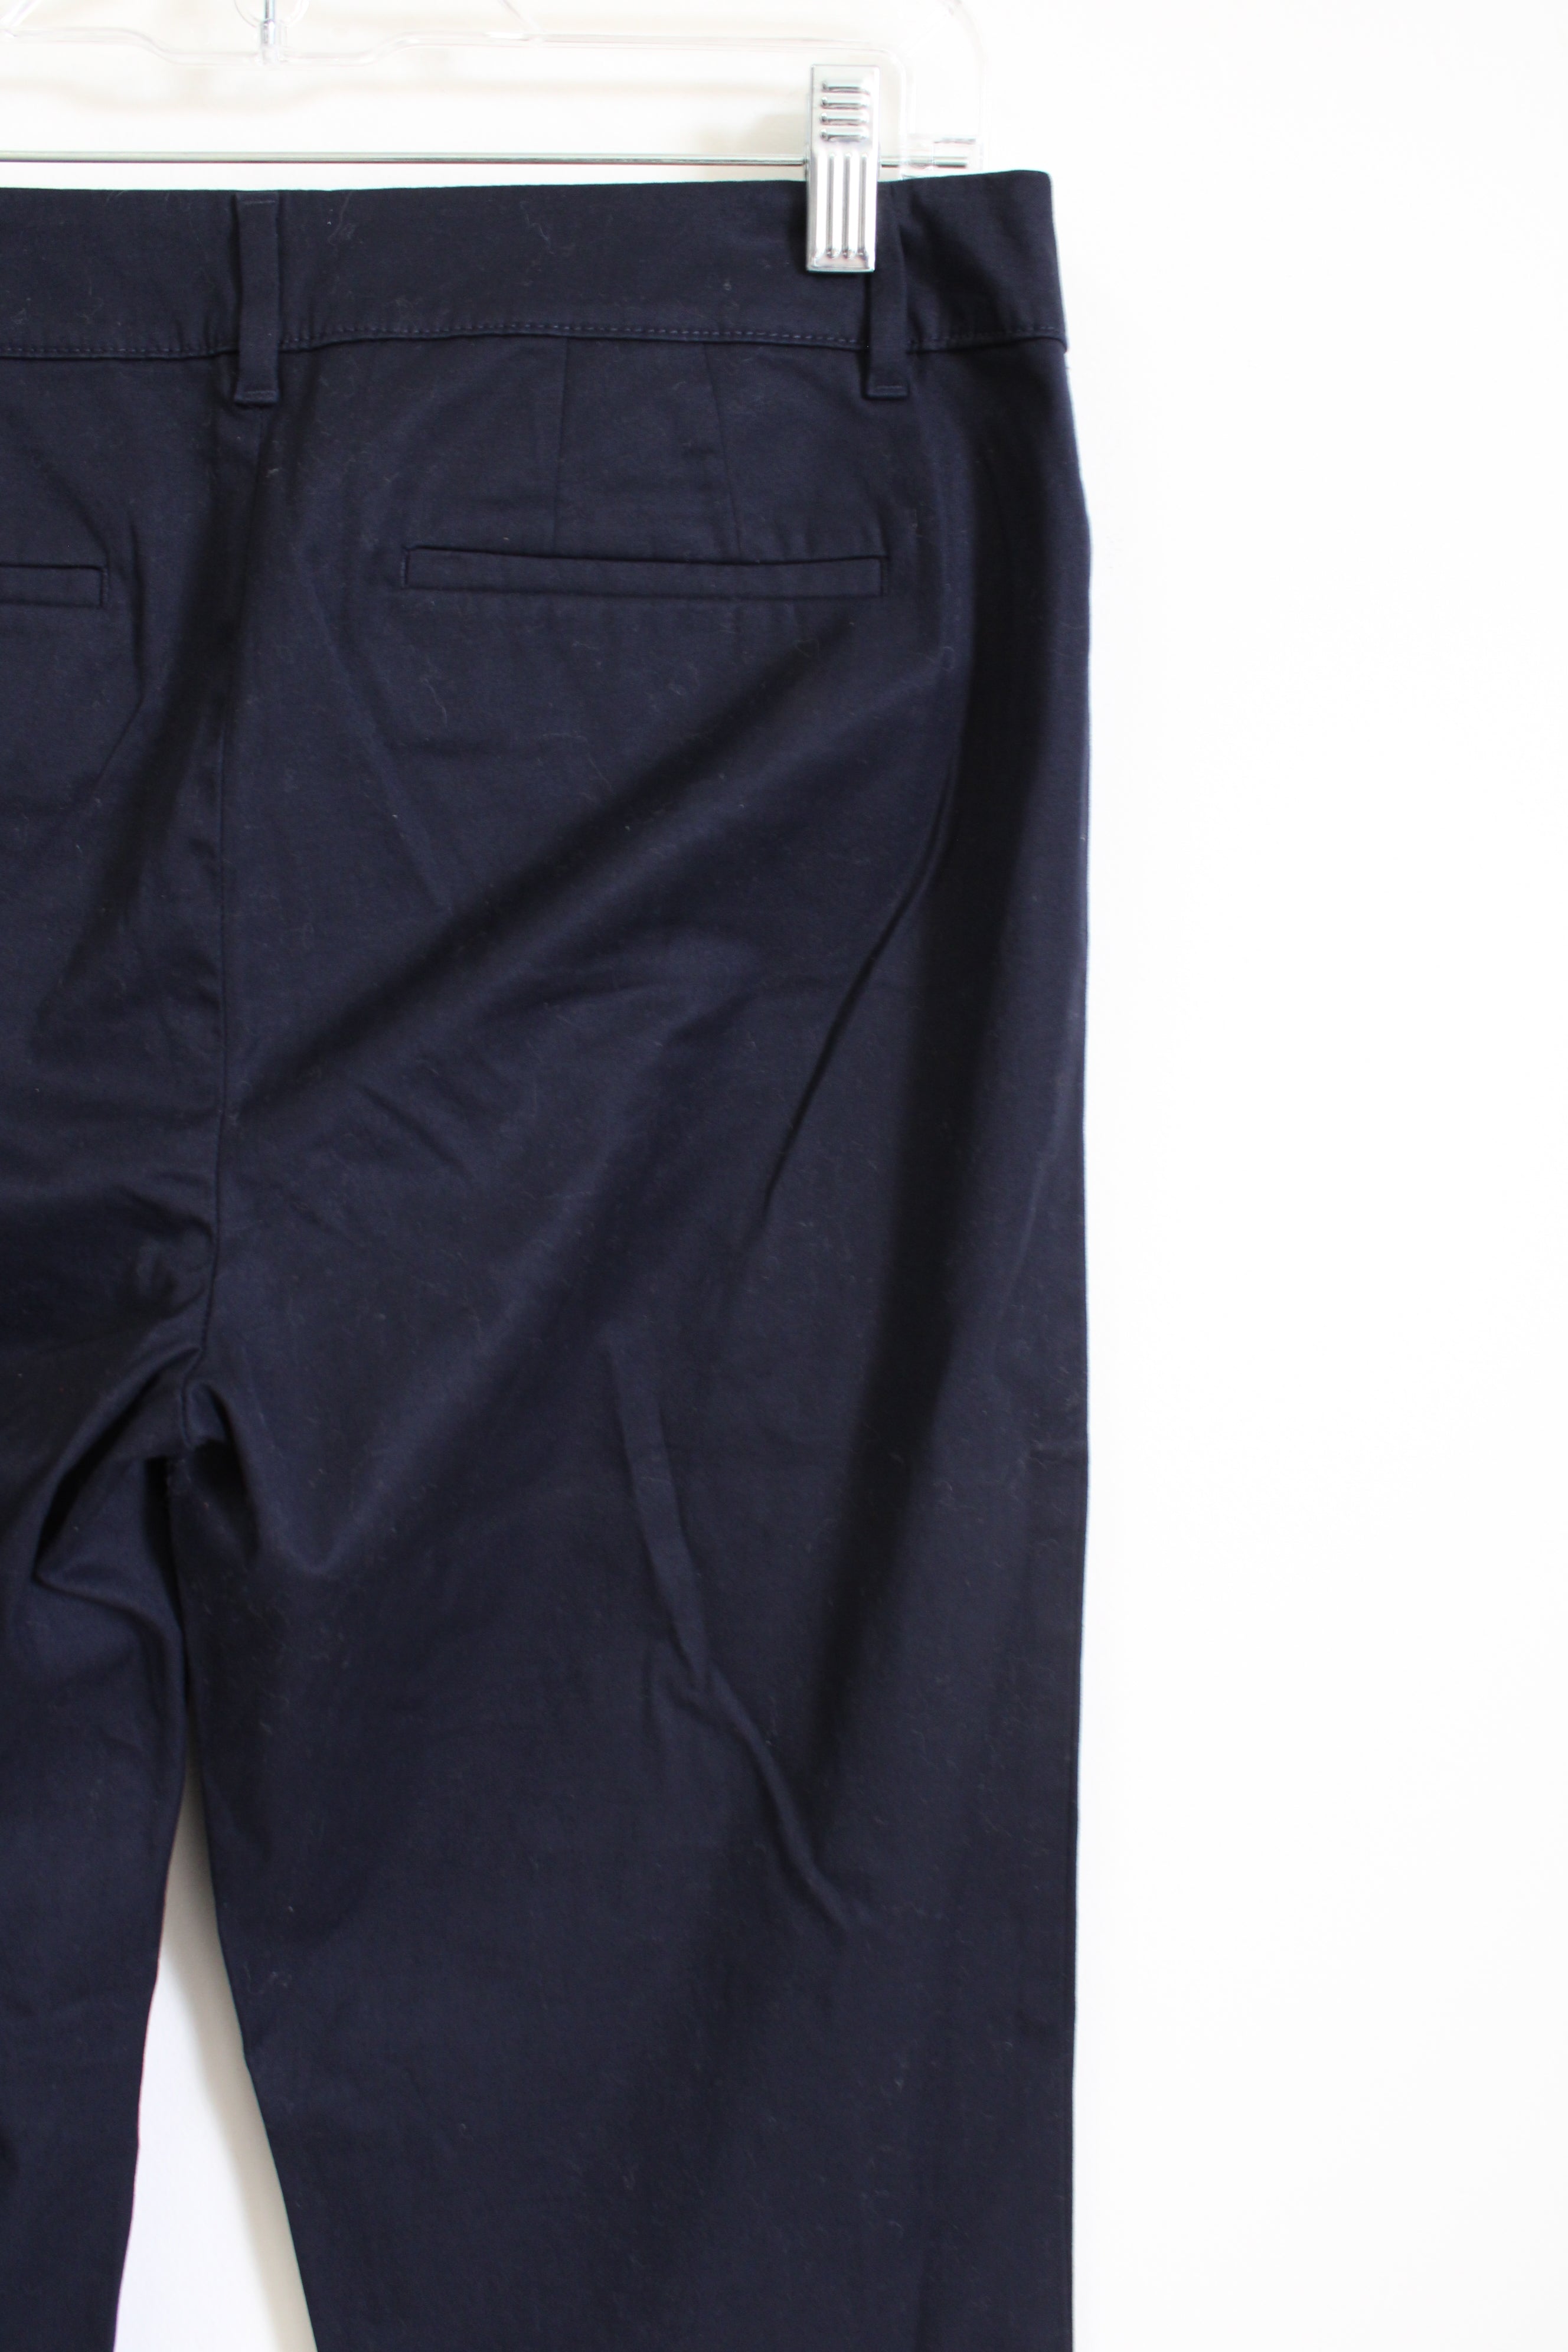 Talbots Perfect Crop Navy Blue Pants | 6